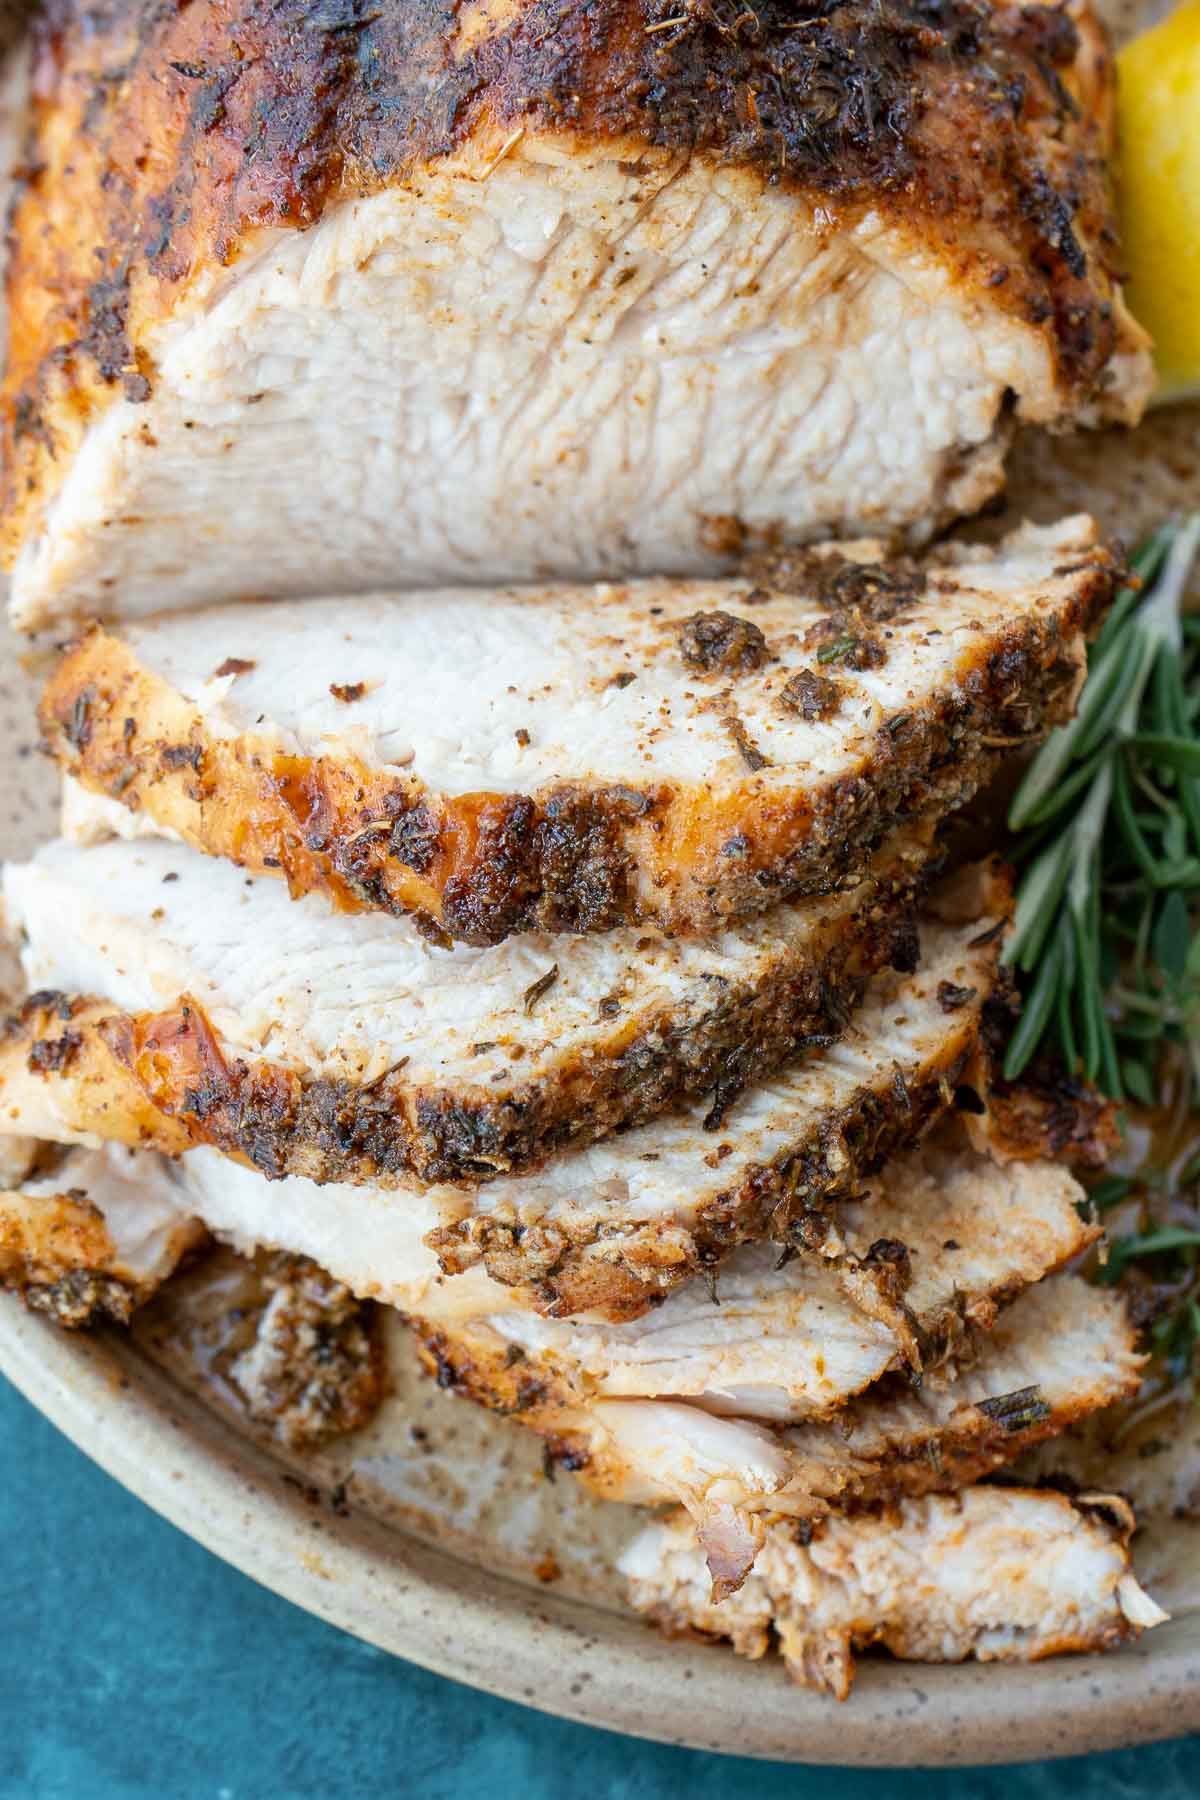 a sliced, seasoned turkey breast on a plate